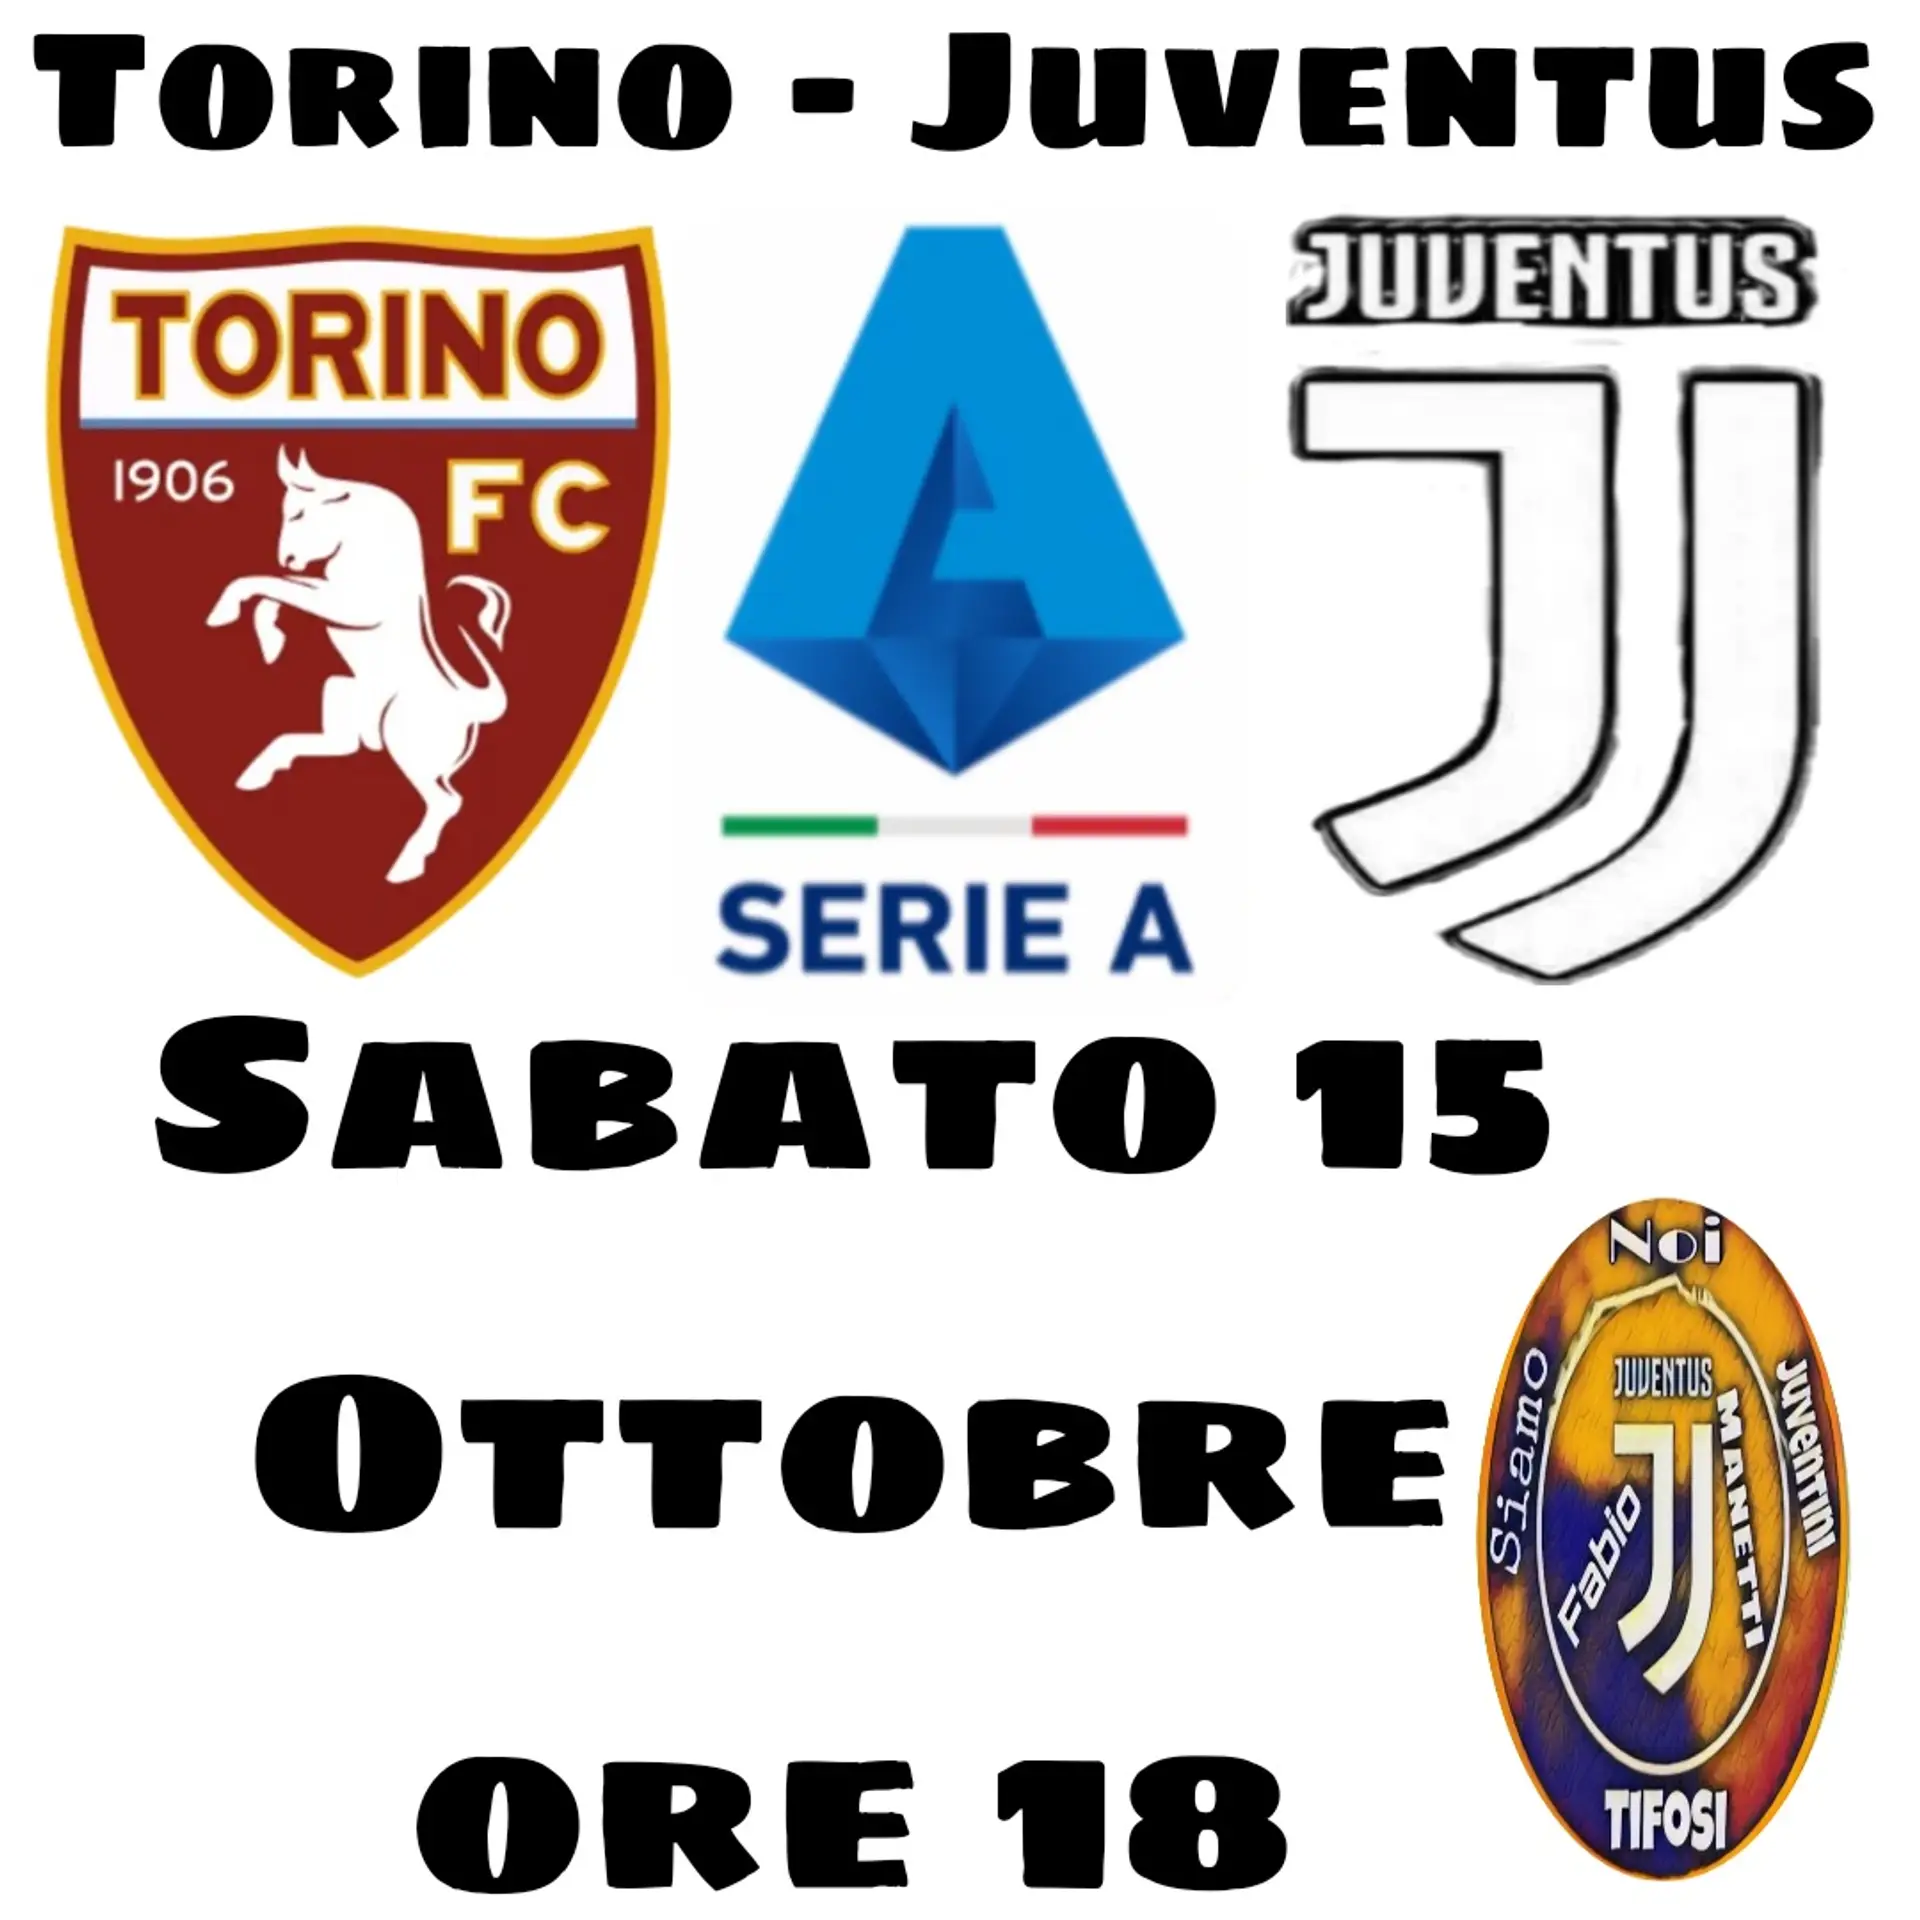 Torino - Juventus Sabato 15 Ottobre ore 18